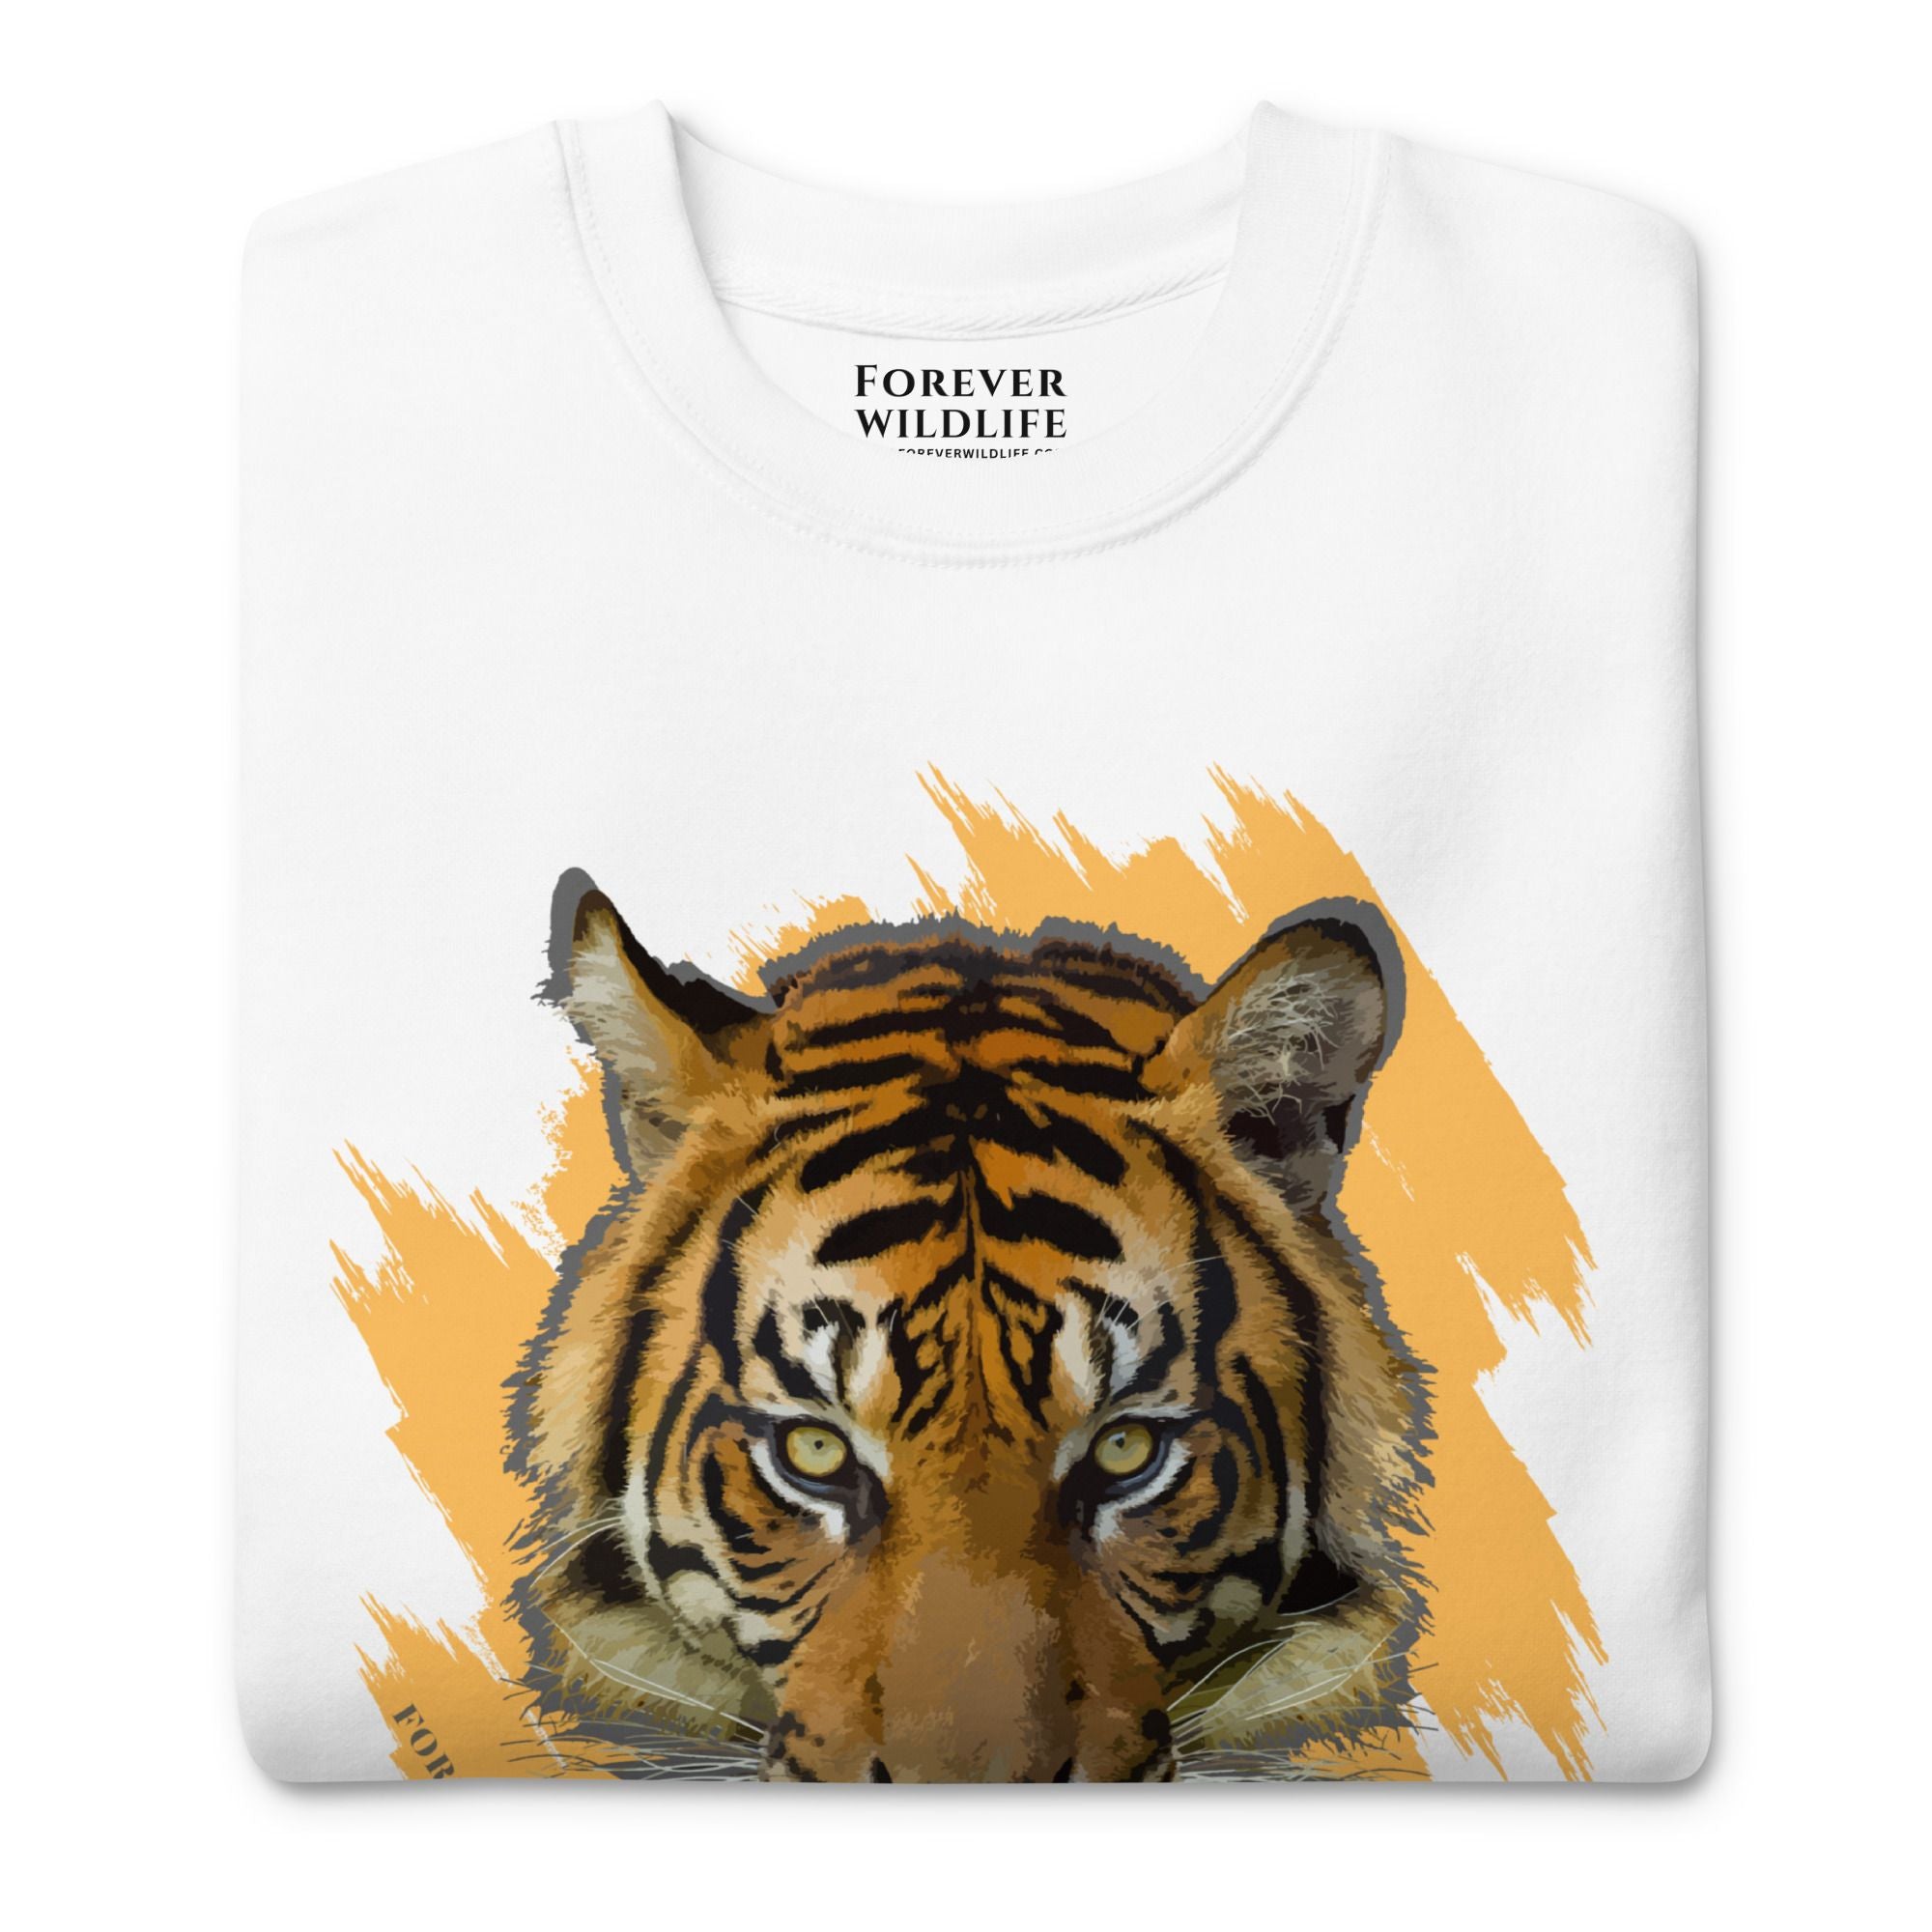 Tiger Sweatshirt in White-Premium Wildlife Animal Inspiration Sweatshirt Design, part of Wildlife Sweatshirts & Clothing from Forever Wildlife.